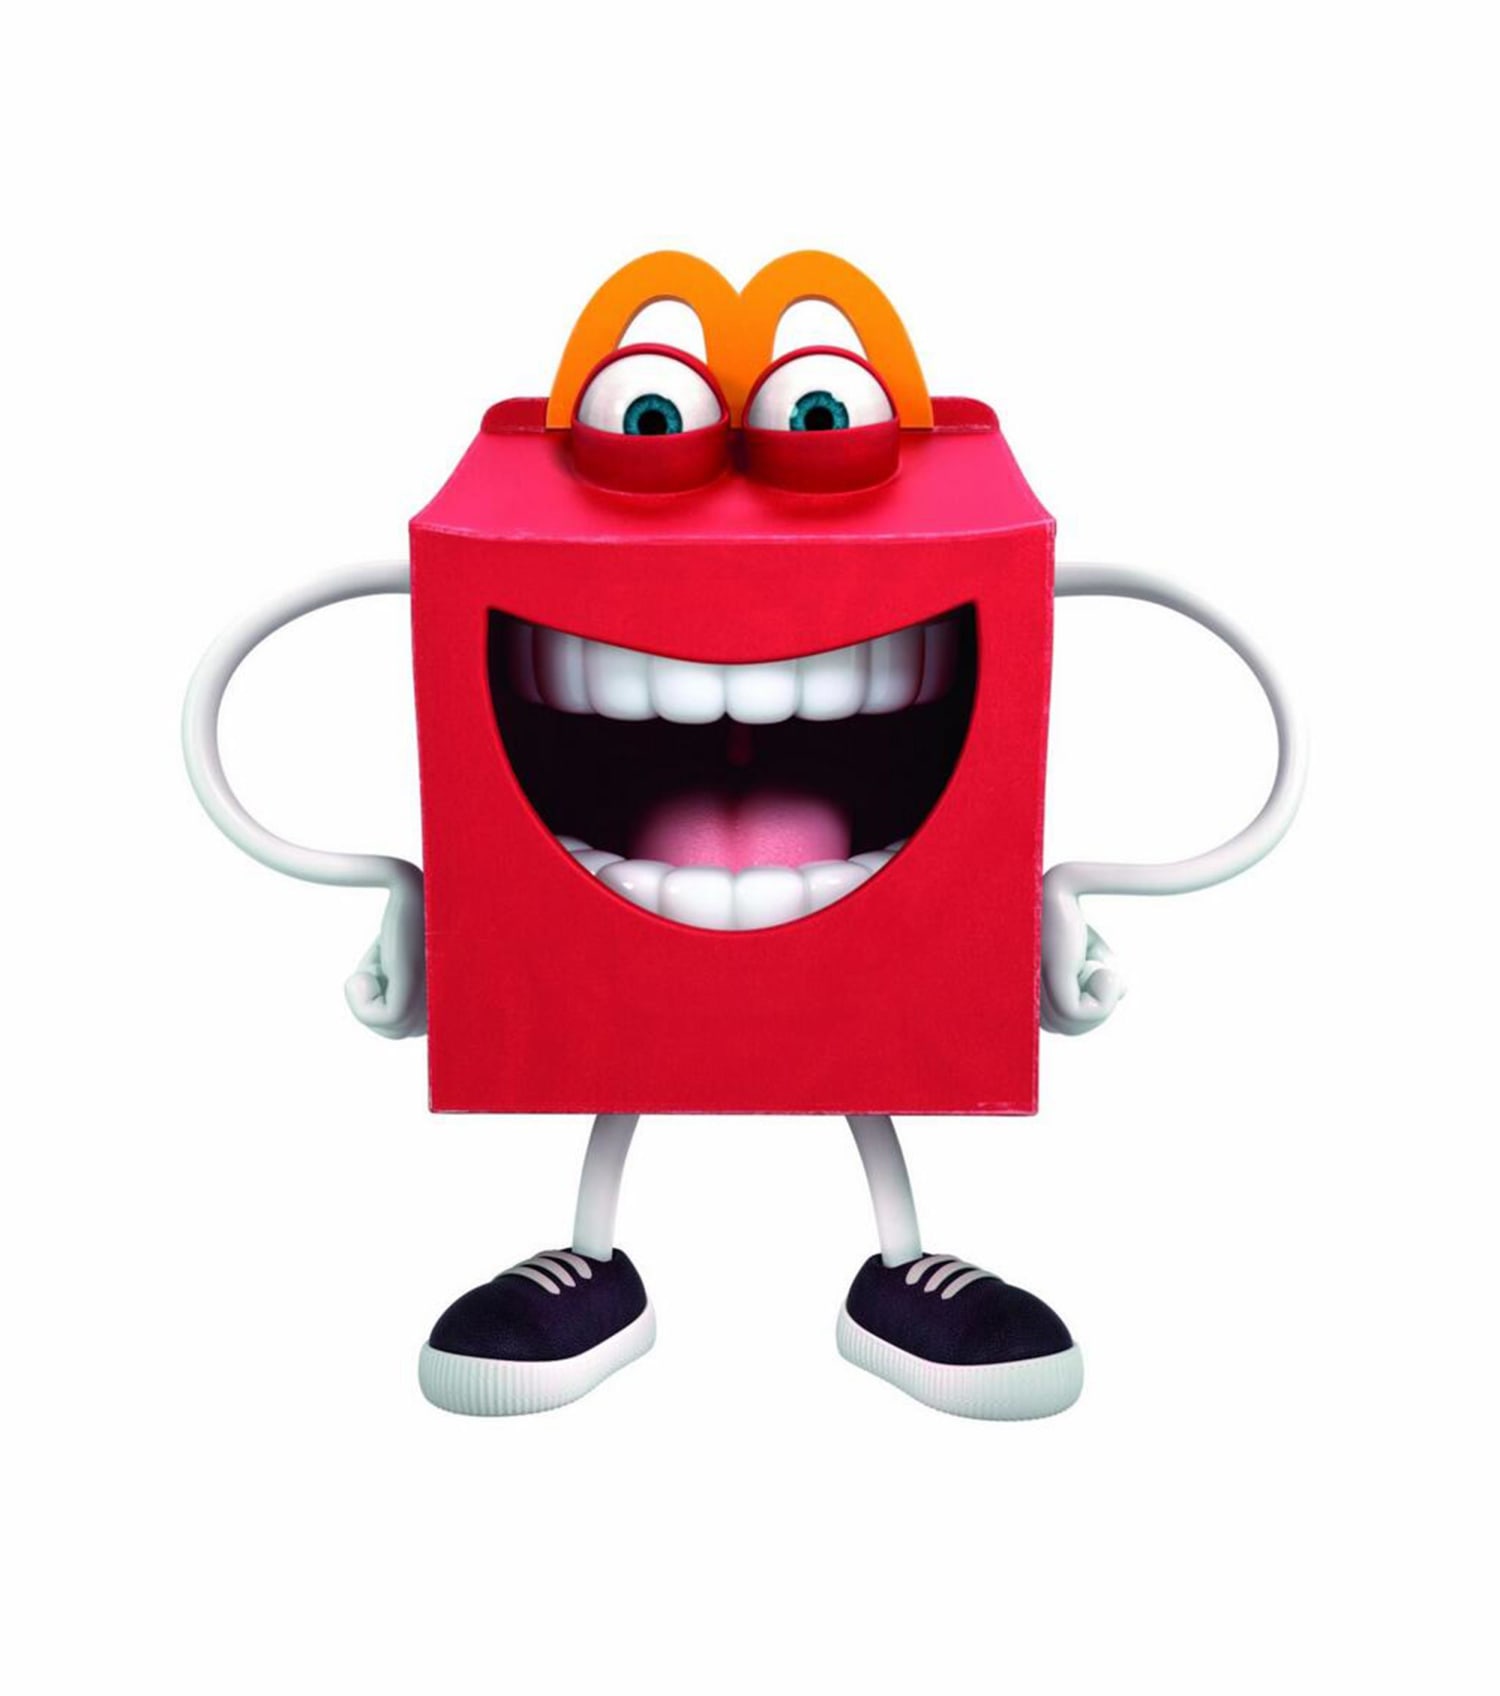 McDonald's New Mascot Is a Box Teeth